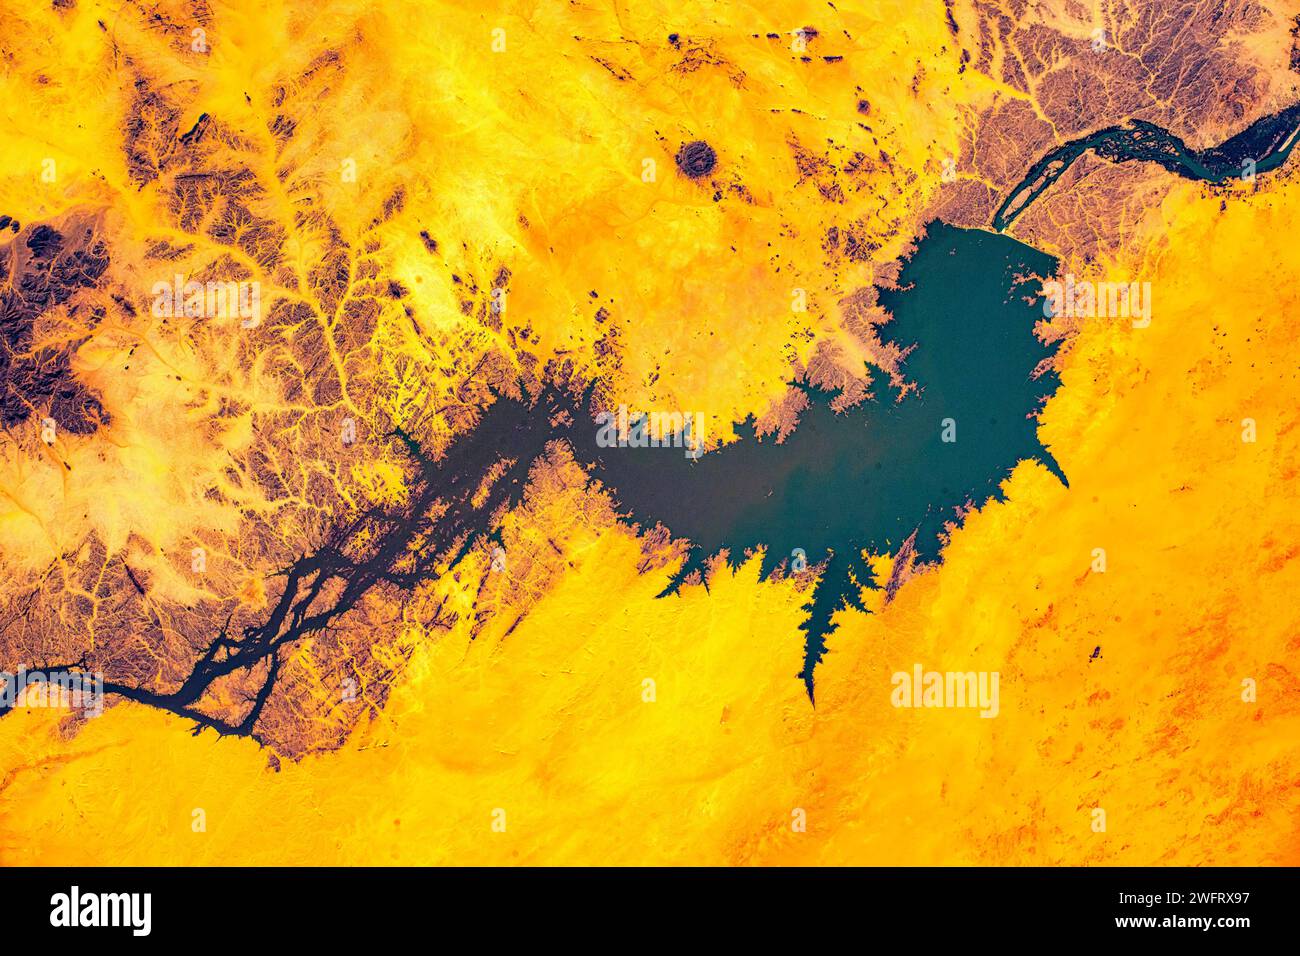 Merowe Reservoir, Sudan. Digital enhancement of a NASA image. Stock Photo